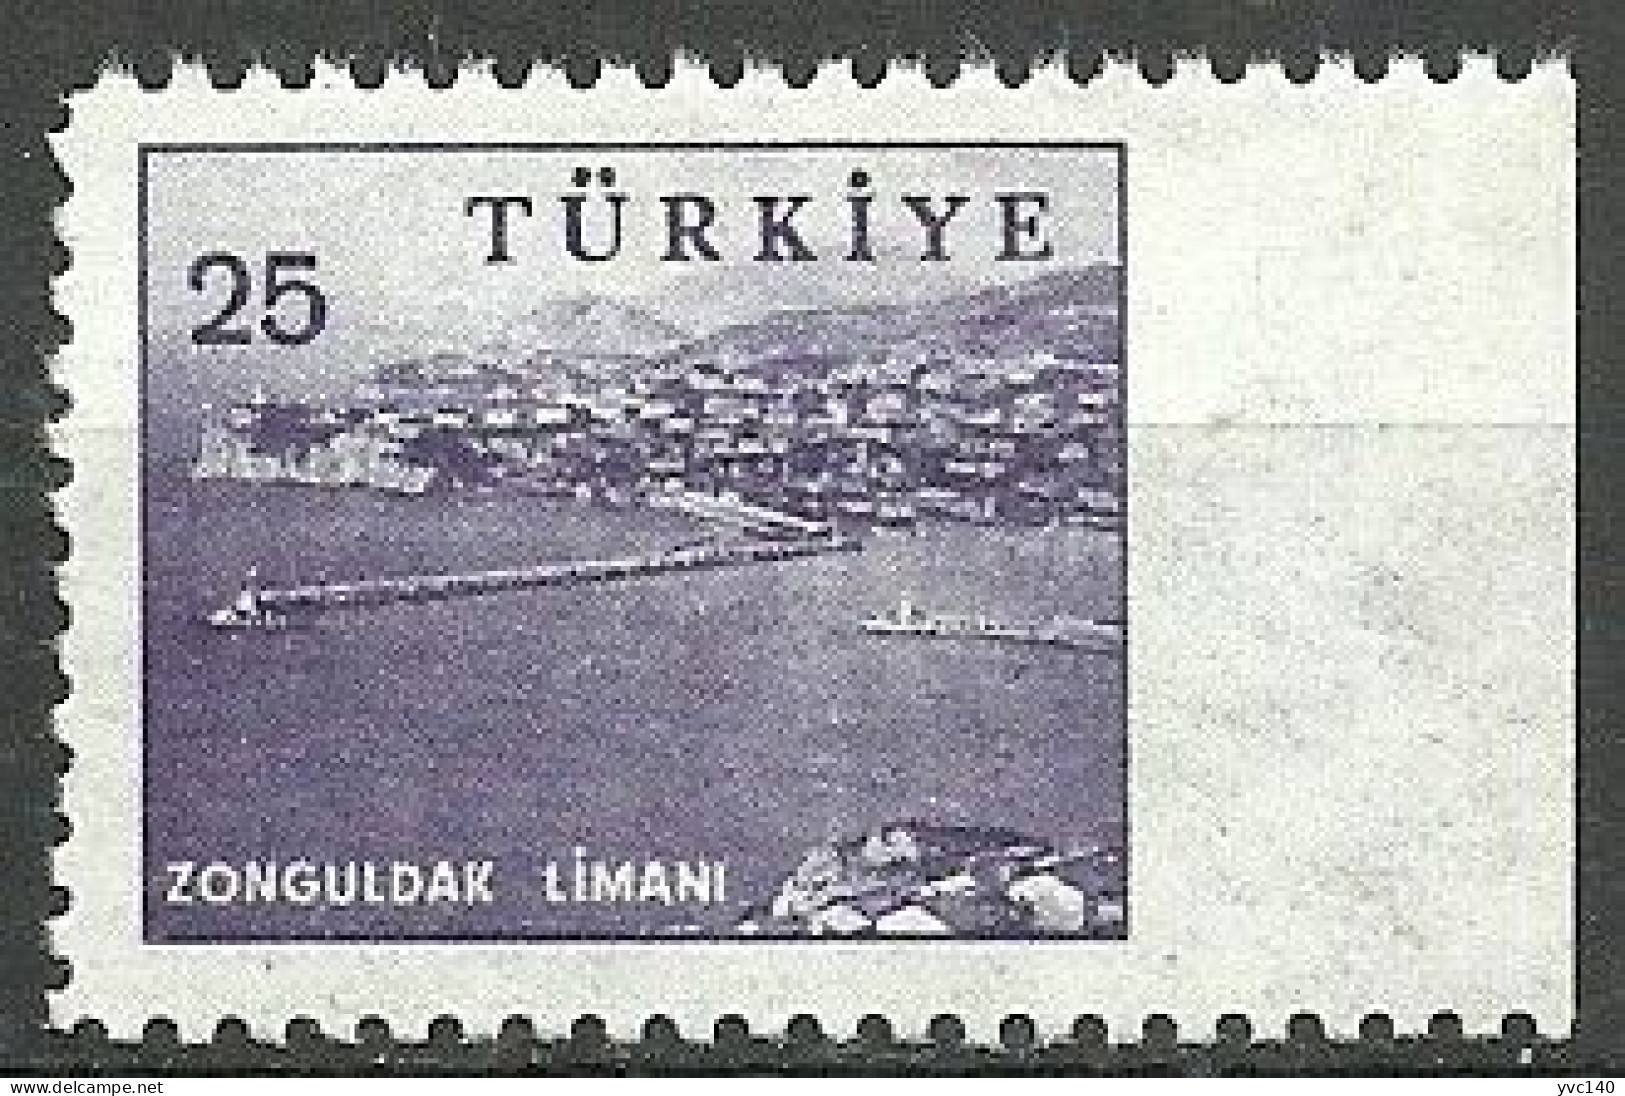 Turkey; 1959 Pictorial Postage Stamp 25 K. ERROR "Imperf. Edge" - Unused Stamps